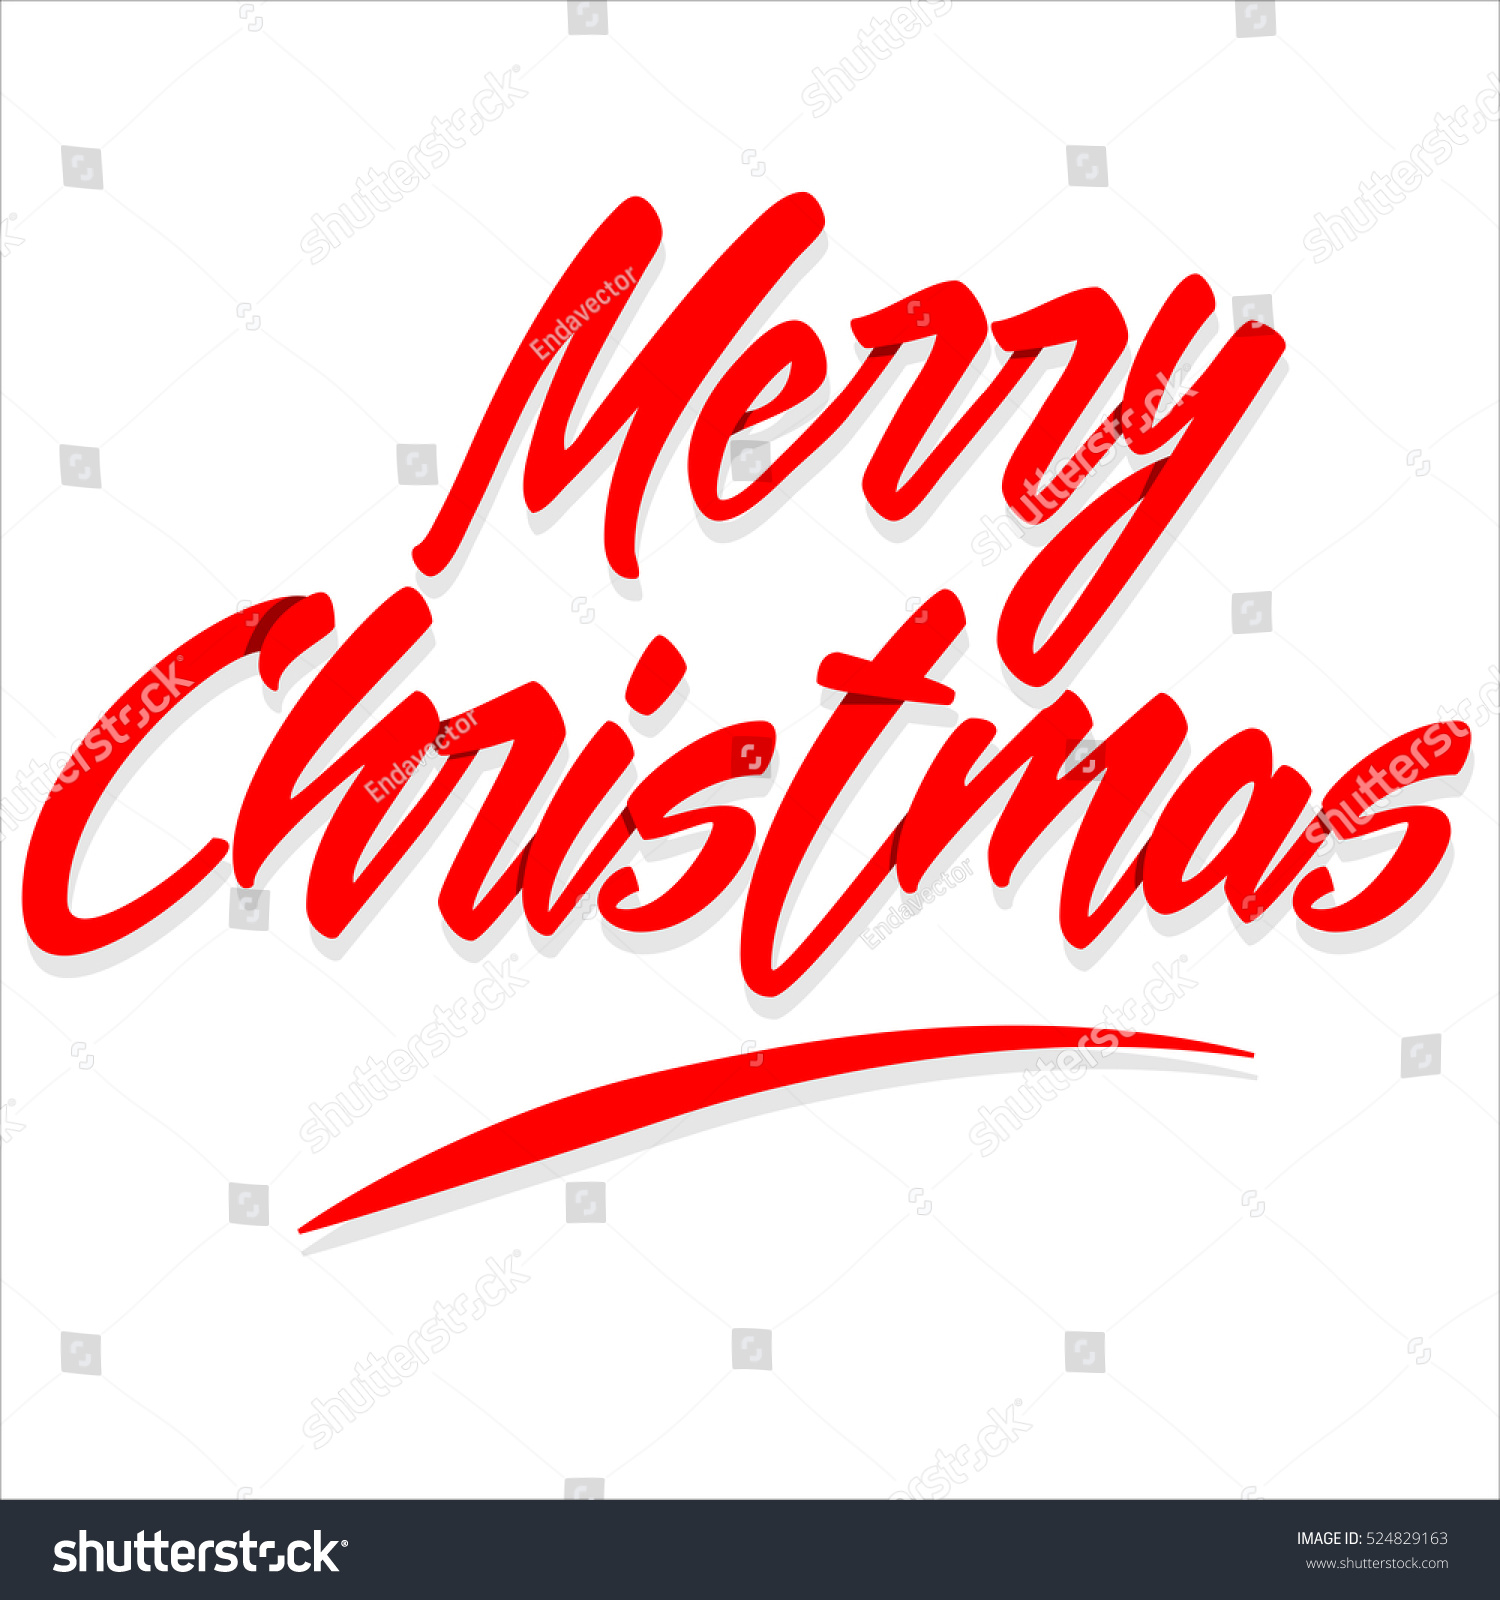 Vector Image Merry Christmas - 524829163 : Shutterstock